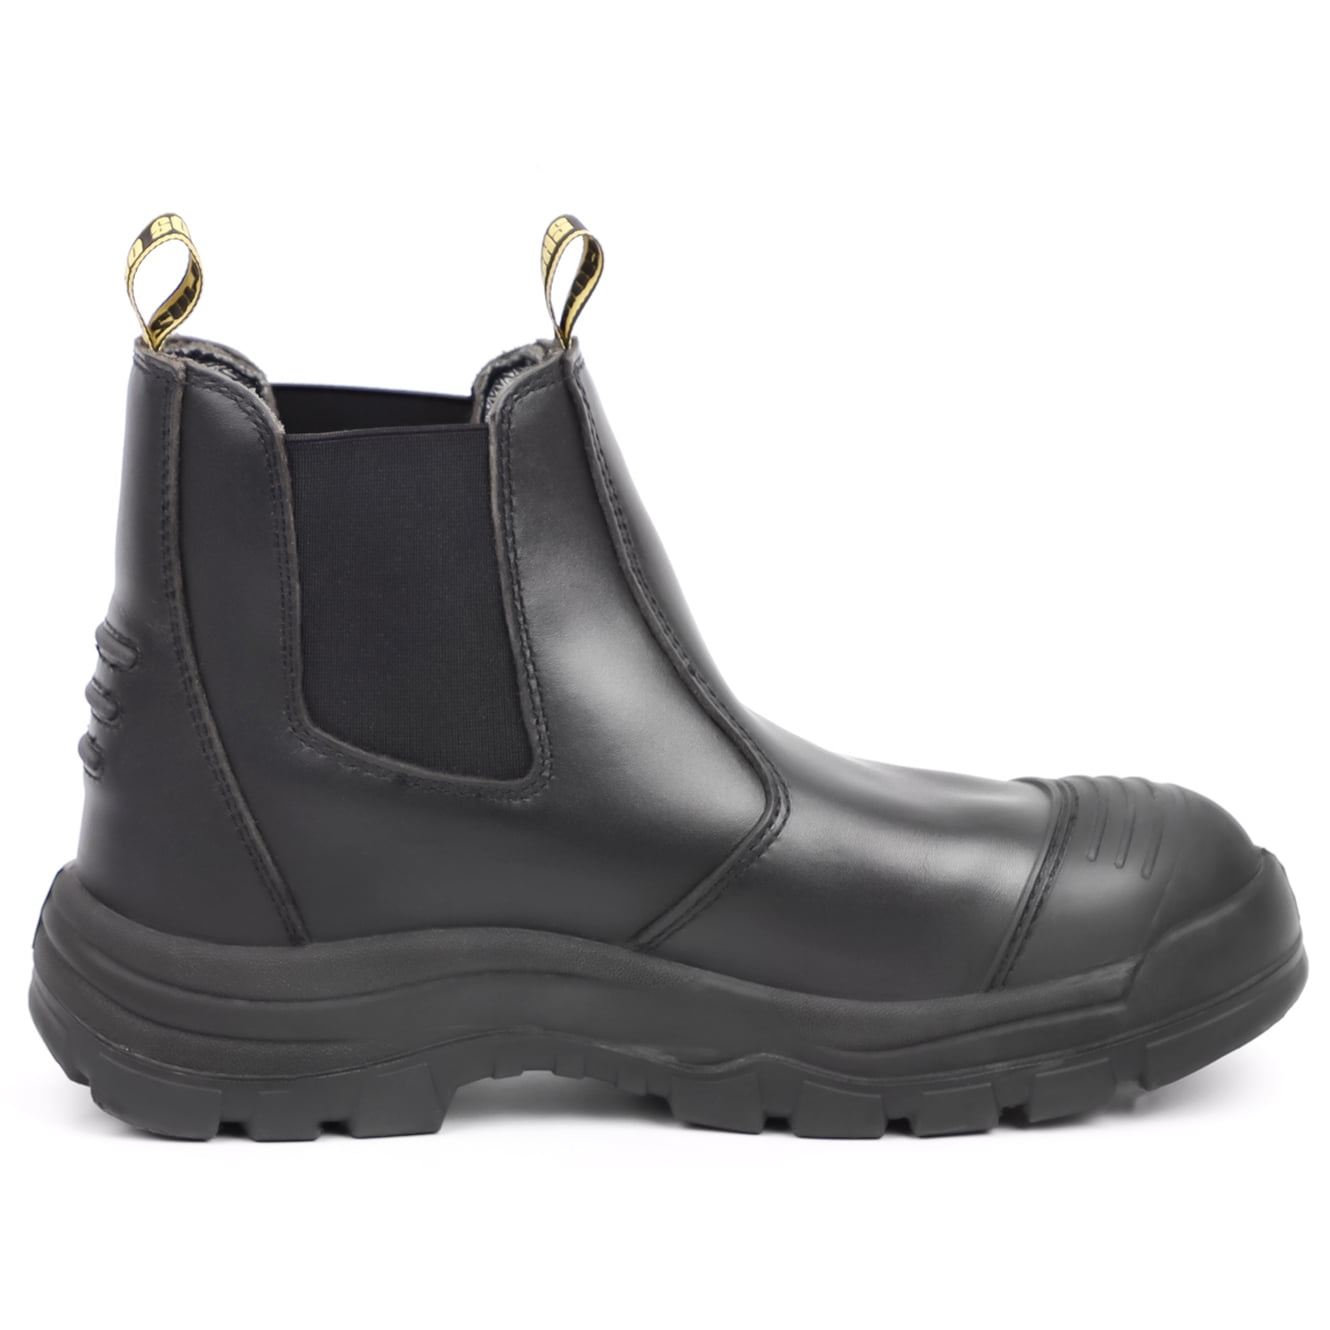 Slip on Work Boots for Men, HANDMEN Soft Toe Waterproof Slip Resistant ...